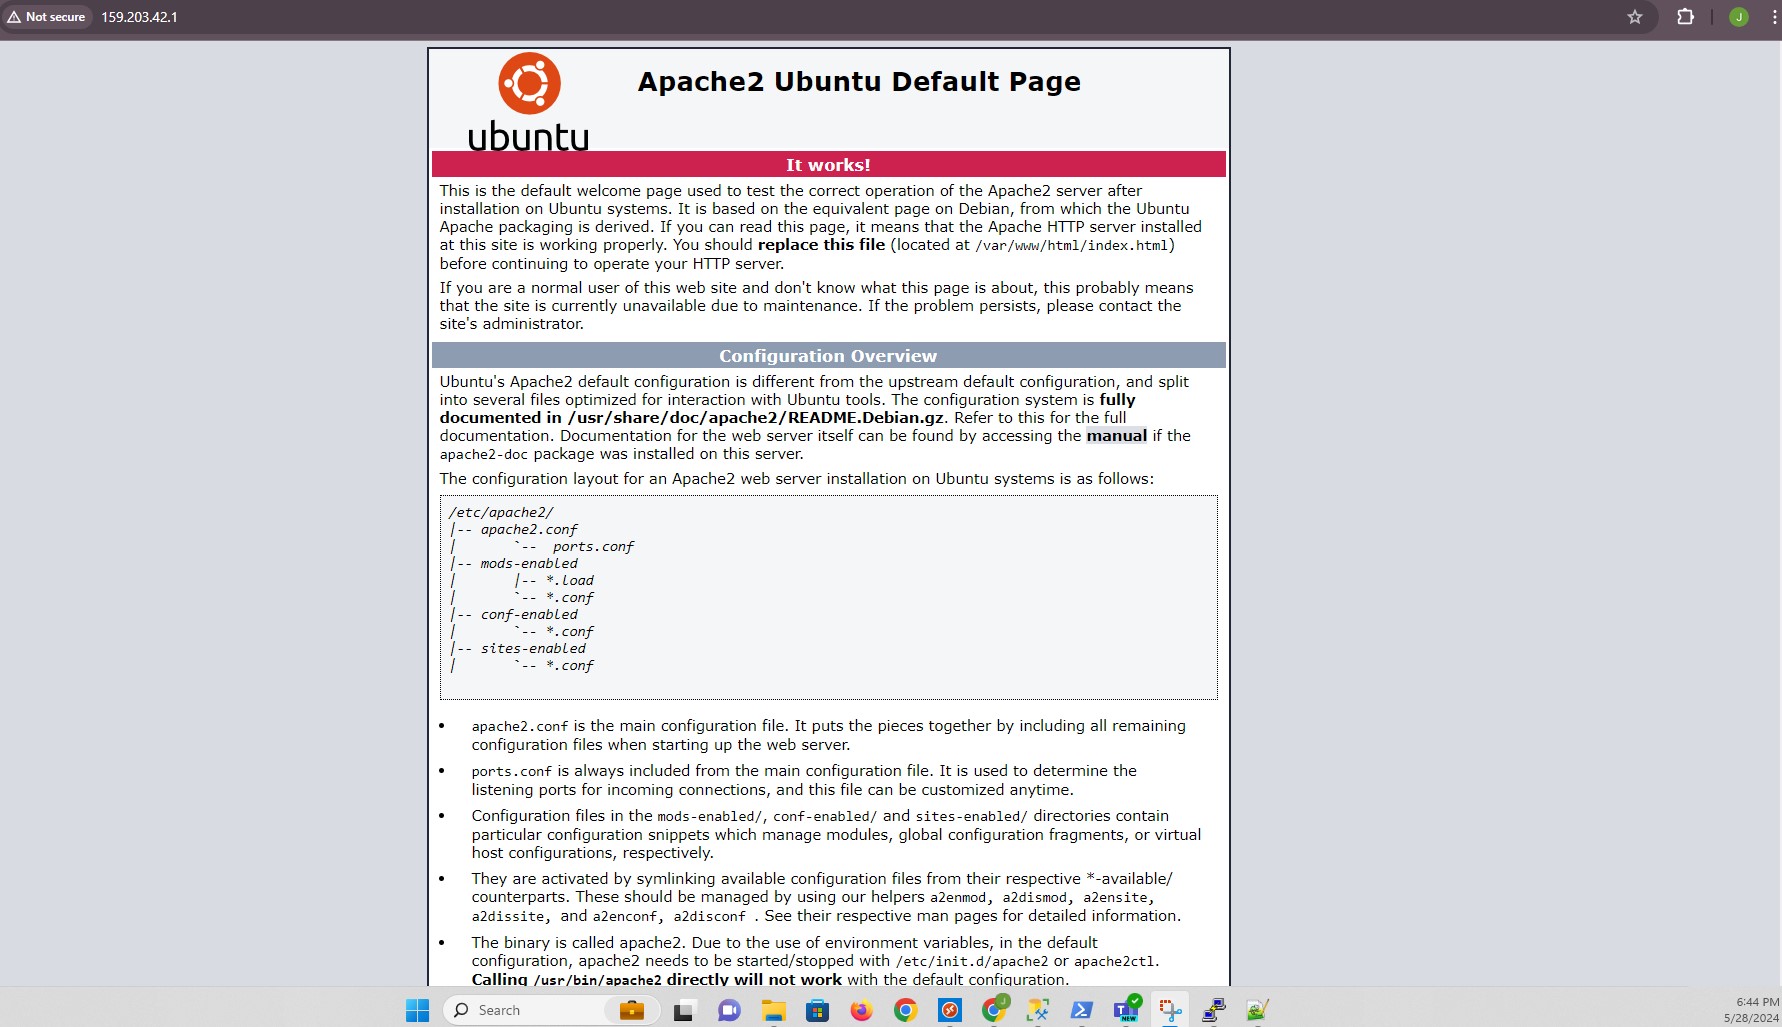 Verify successful installation of Apache